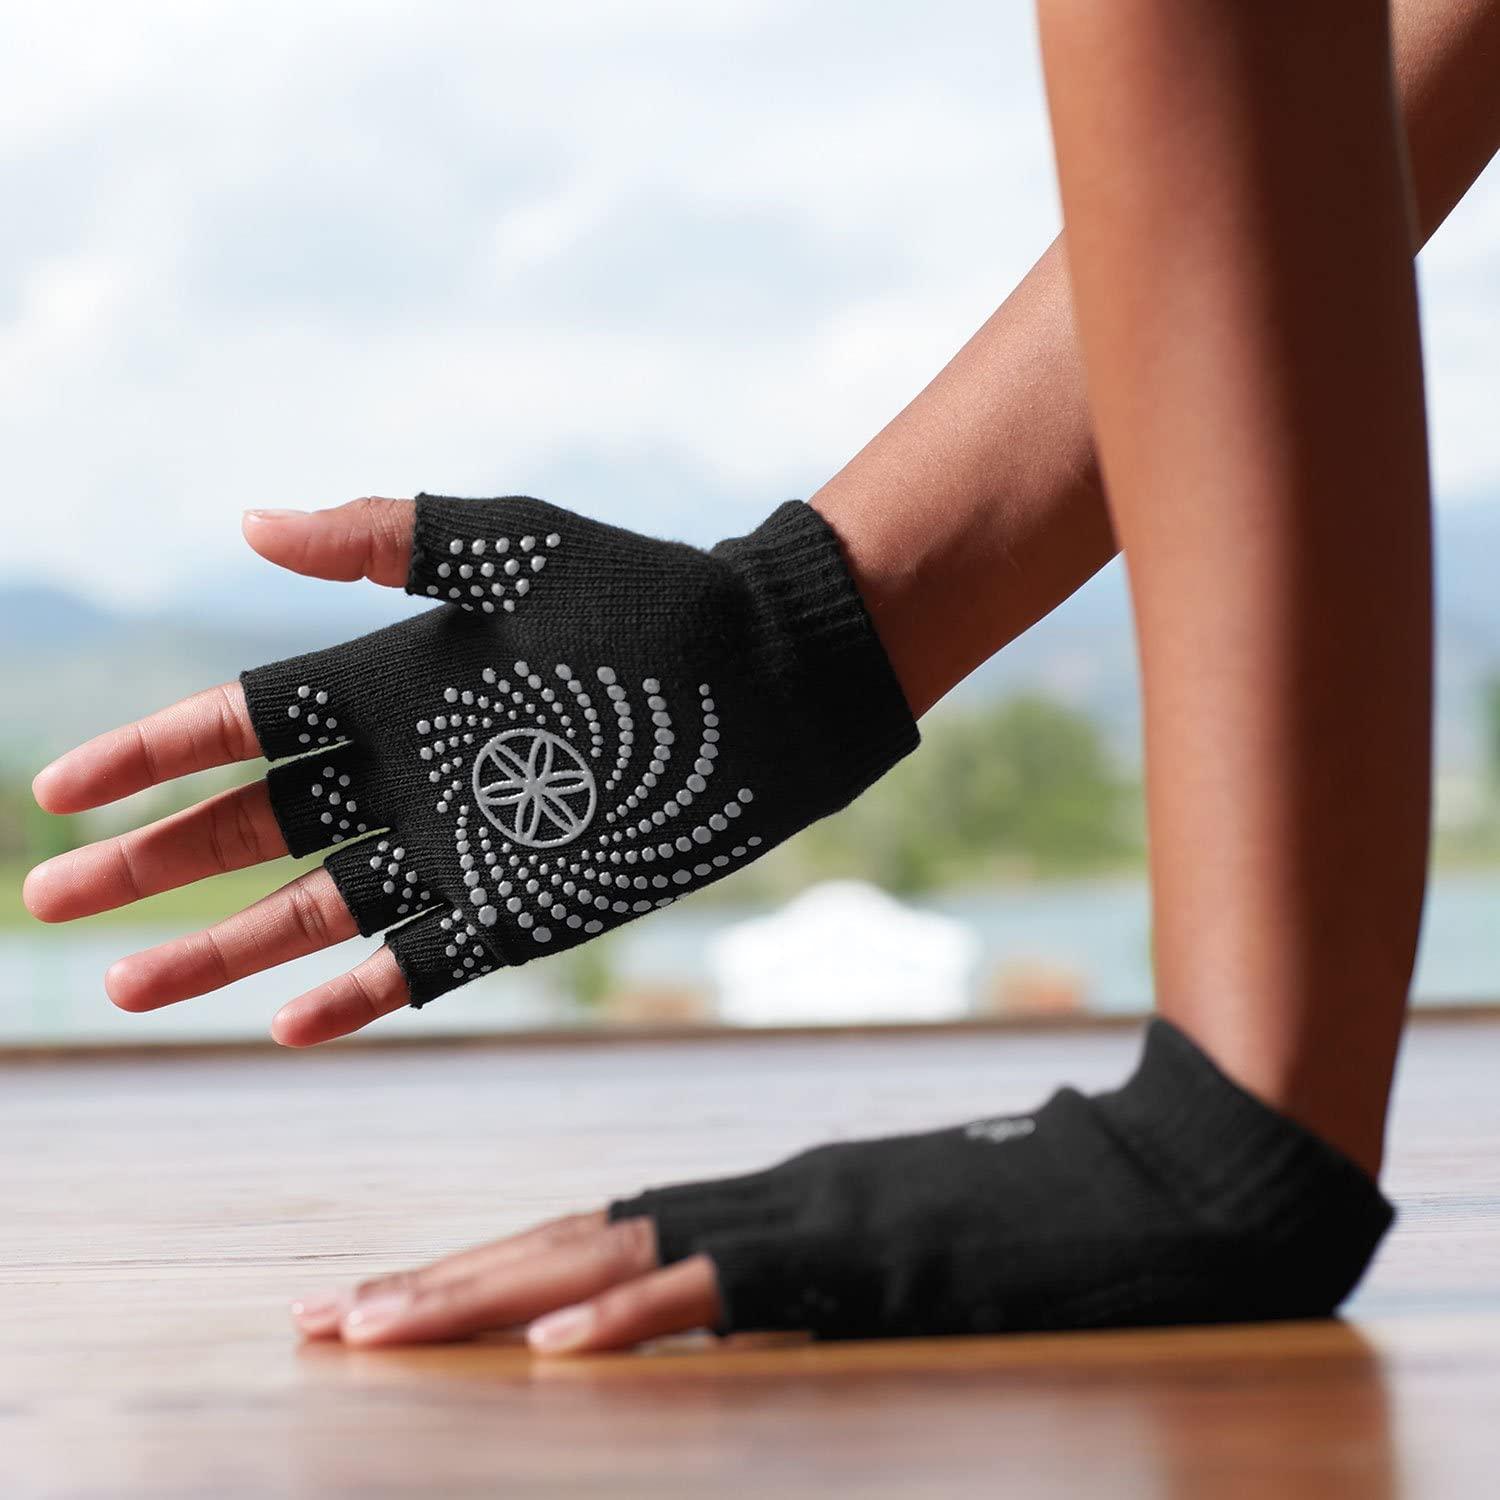 Gaiam Yoga Socks - 1 Mary Jane All Grip, No Slip NEW in Package